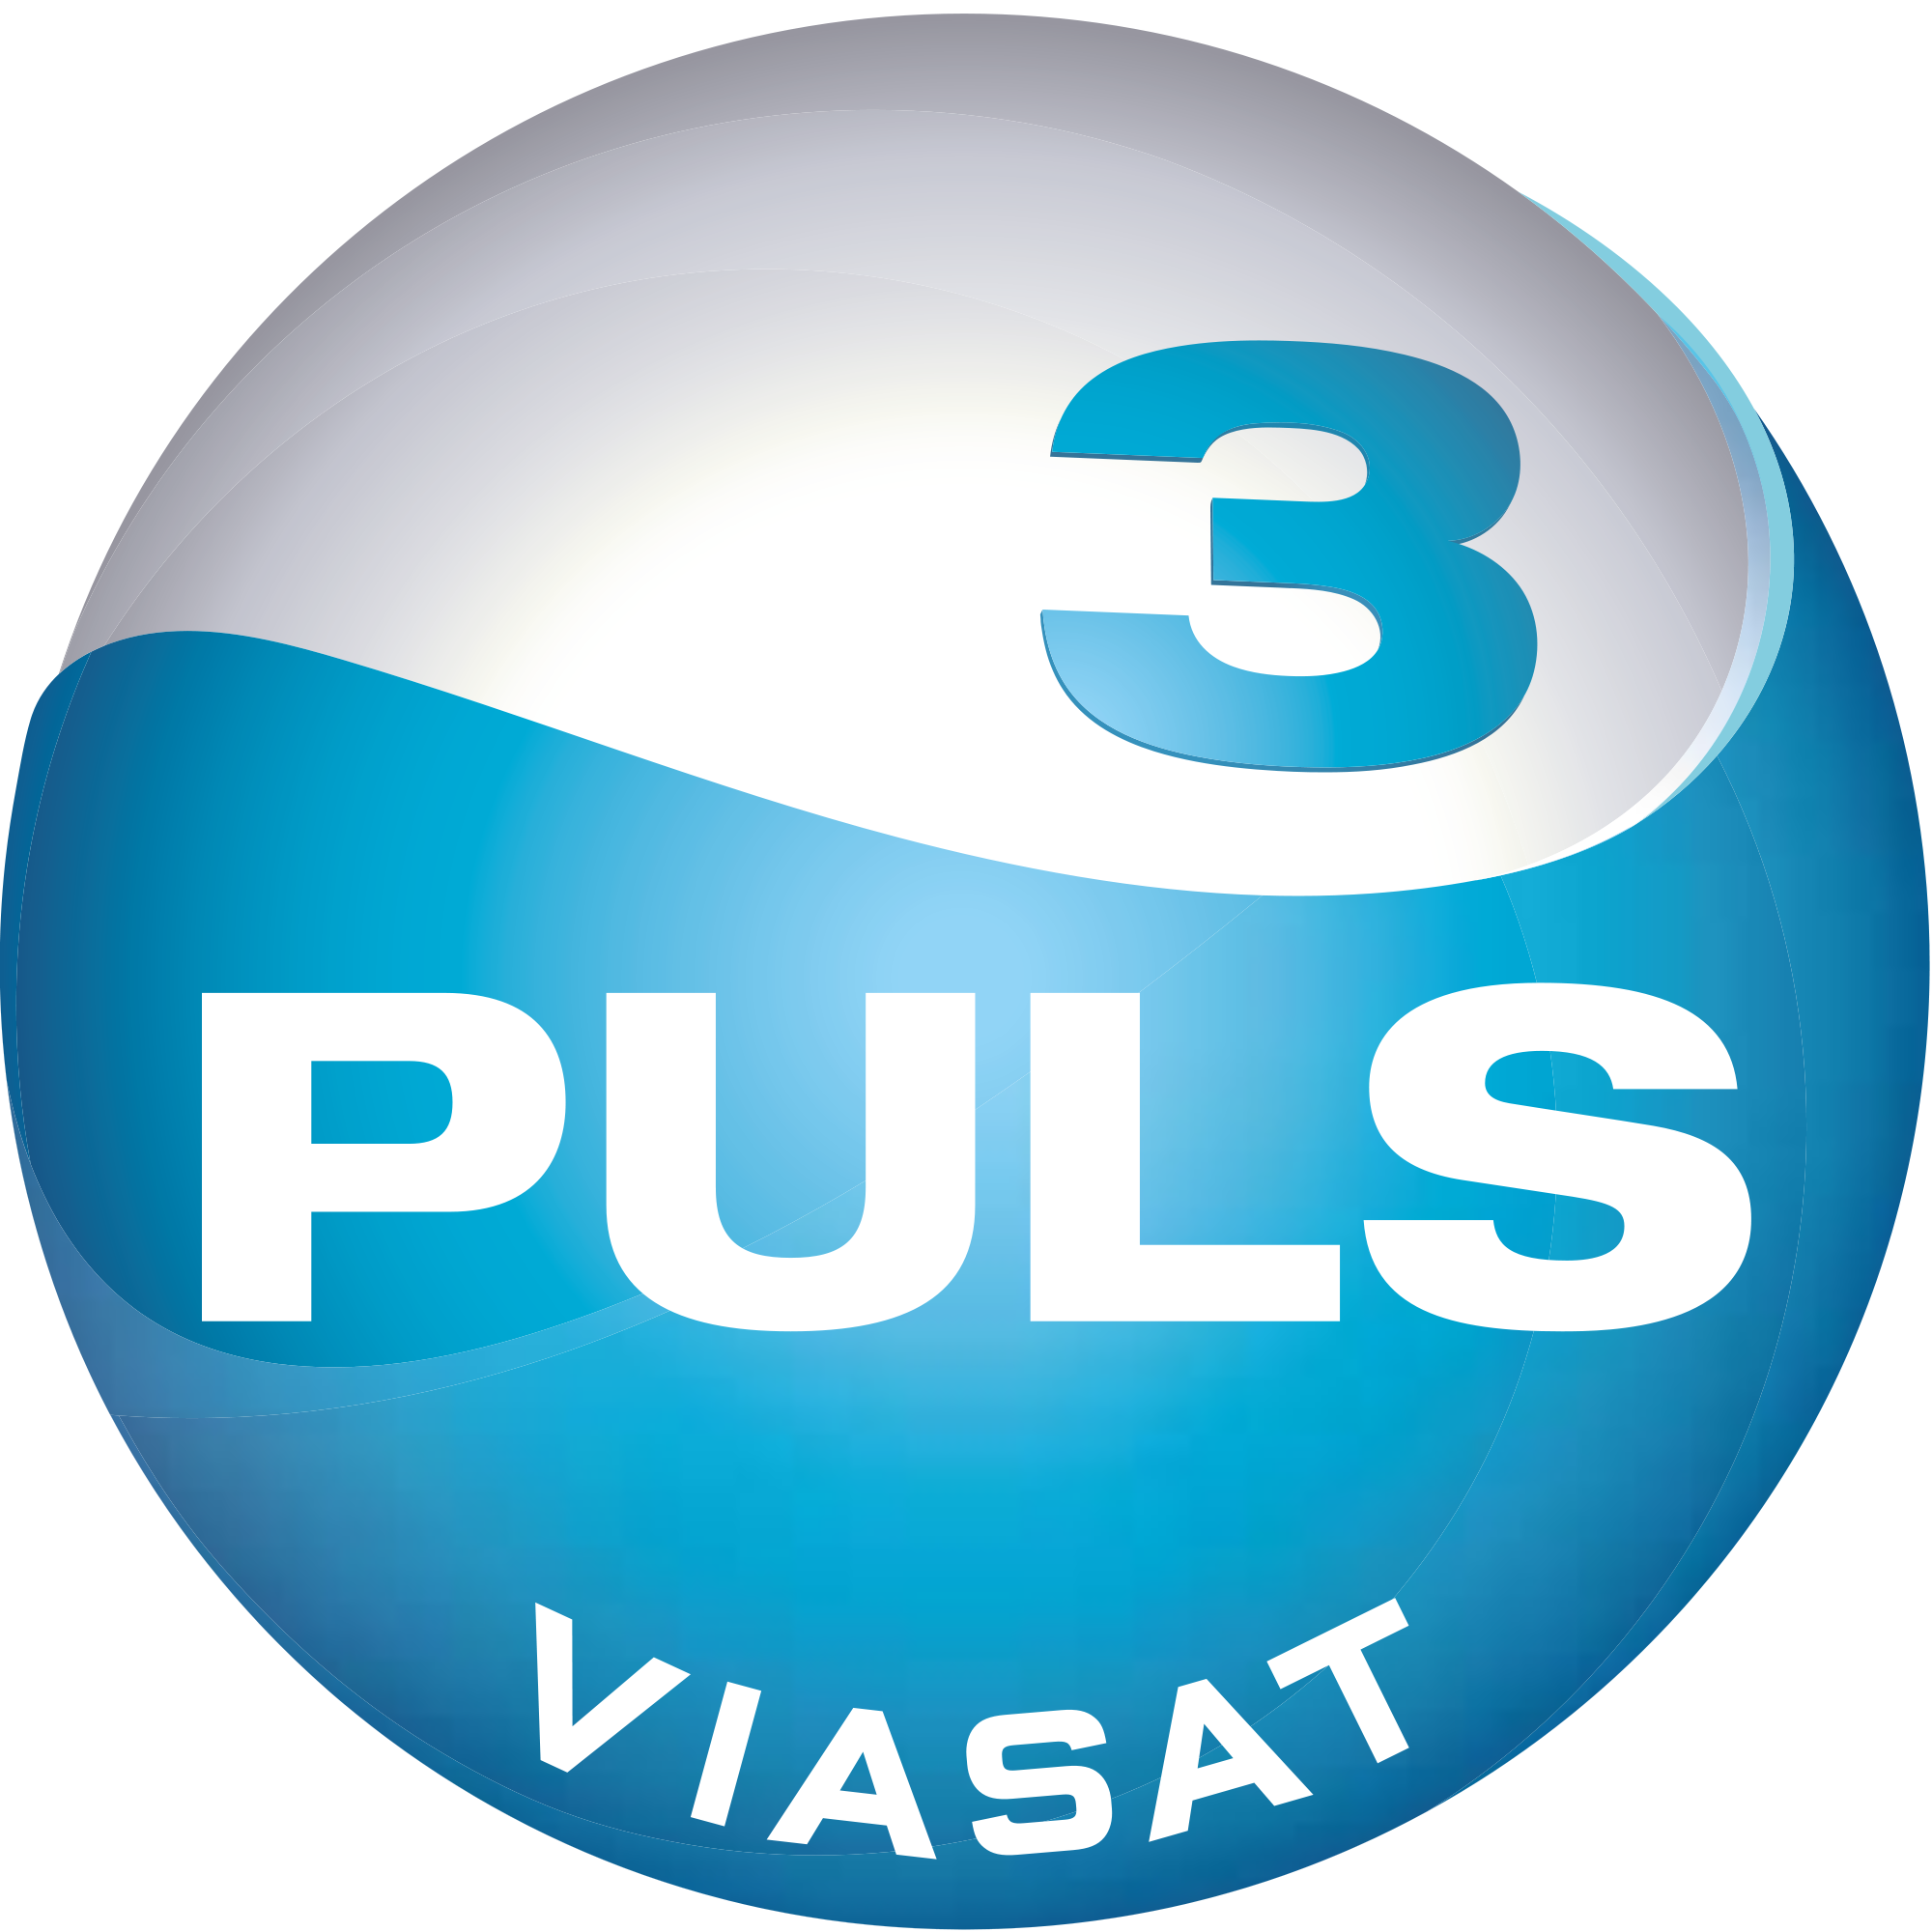 Tv3 Viasat. ТВ-ТВ-3. Viasat-3. TV puls.